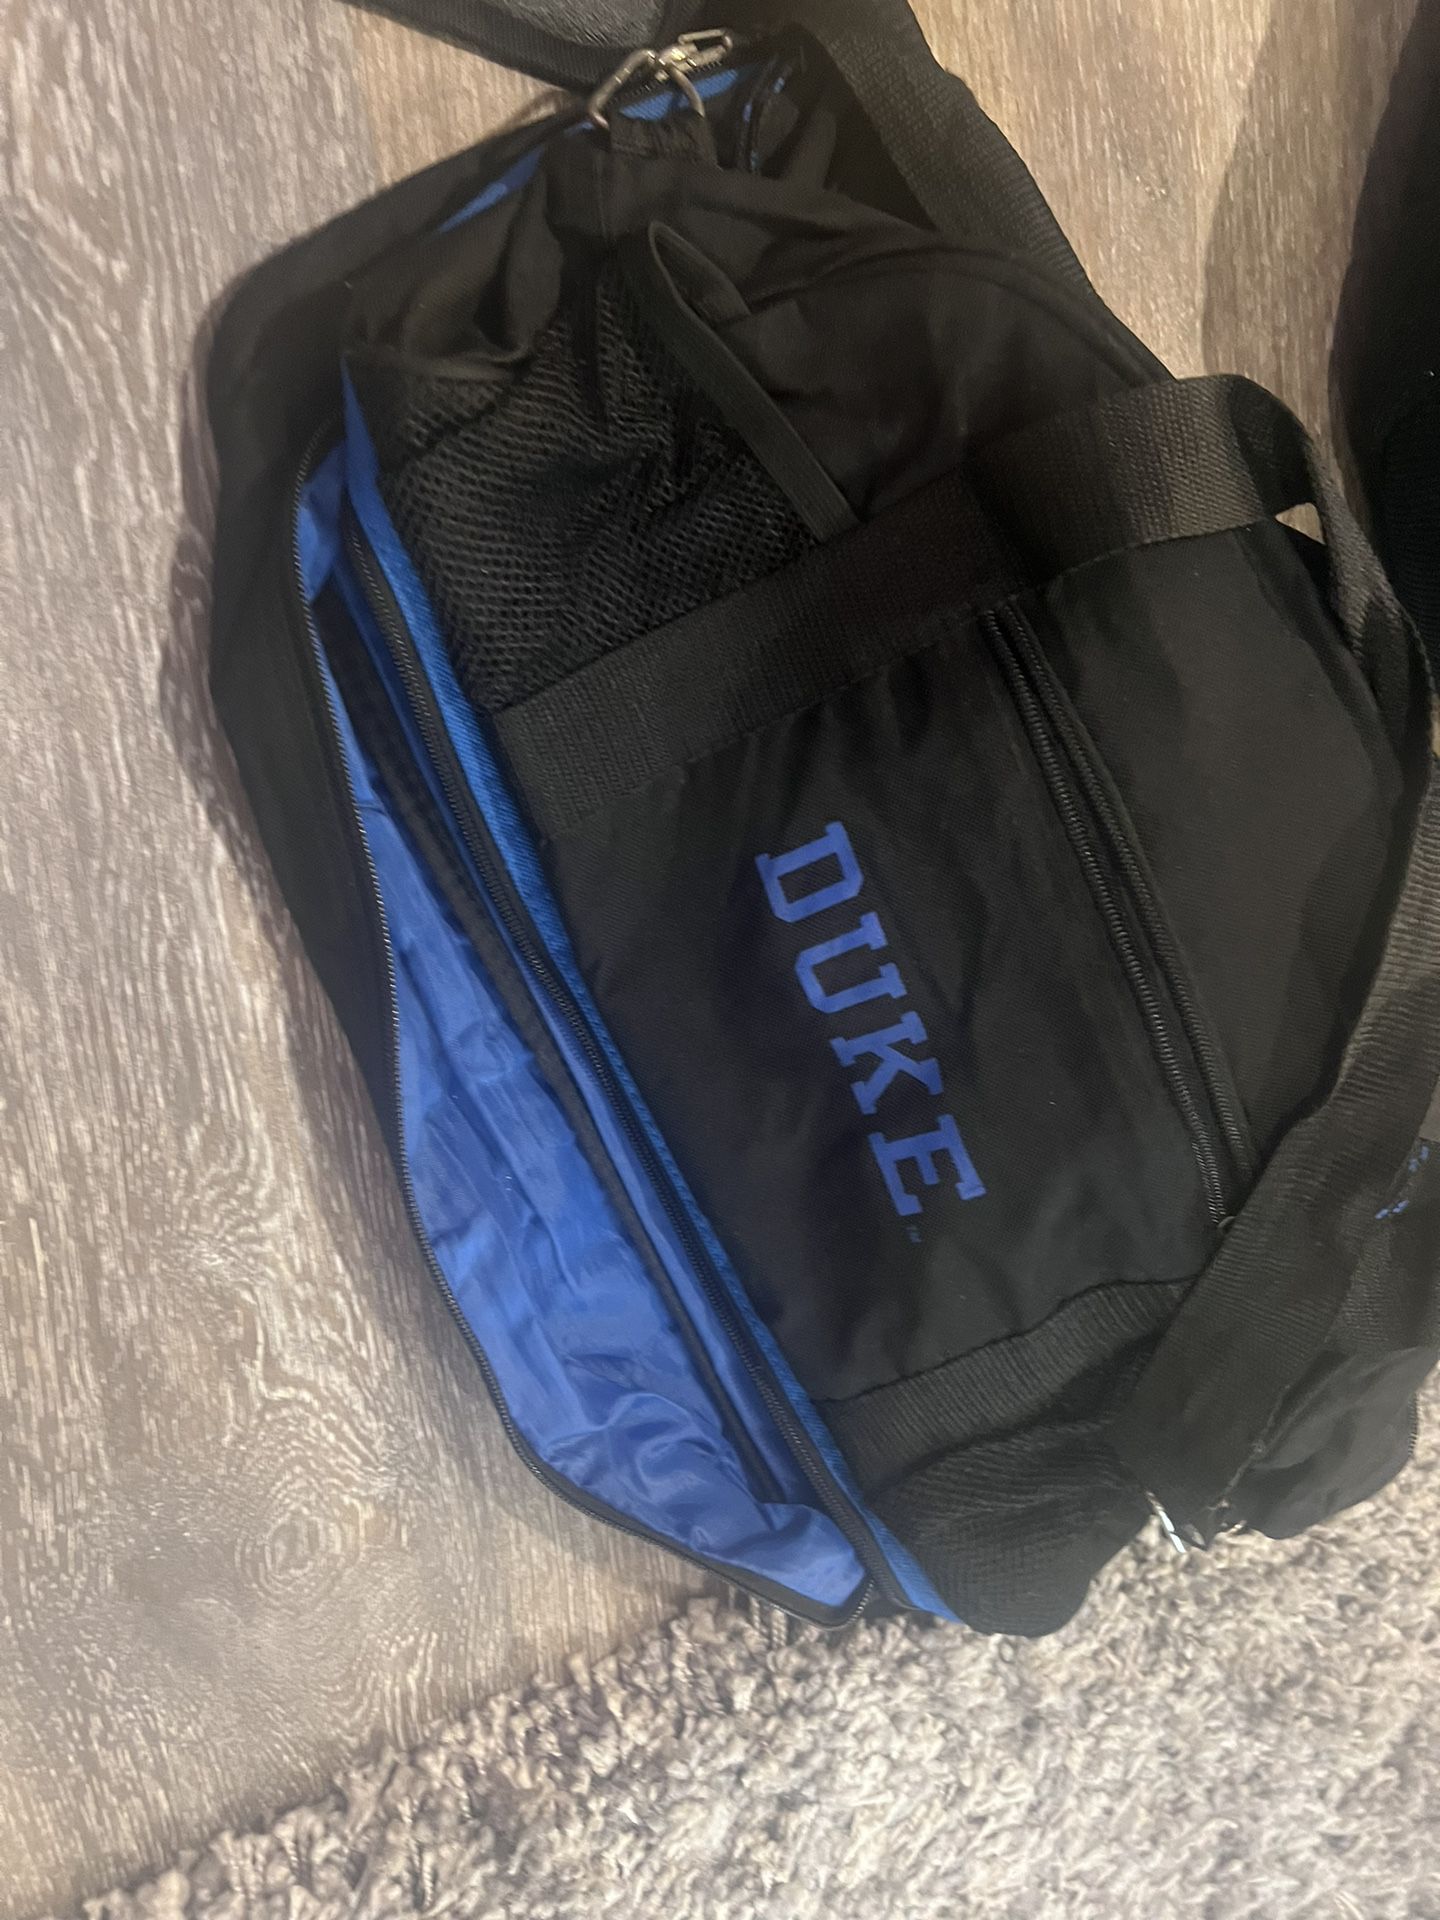 Duke Duffle Bag Black And Royal Blue 